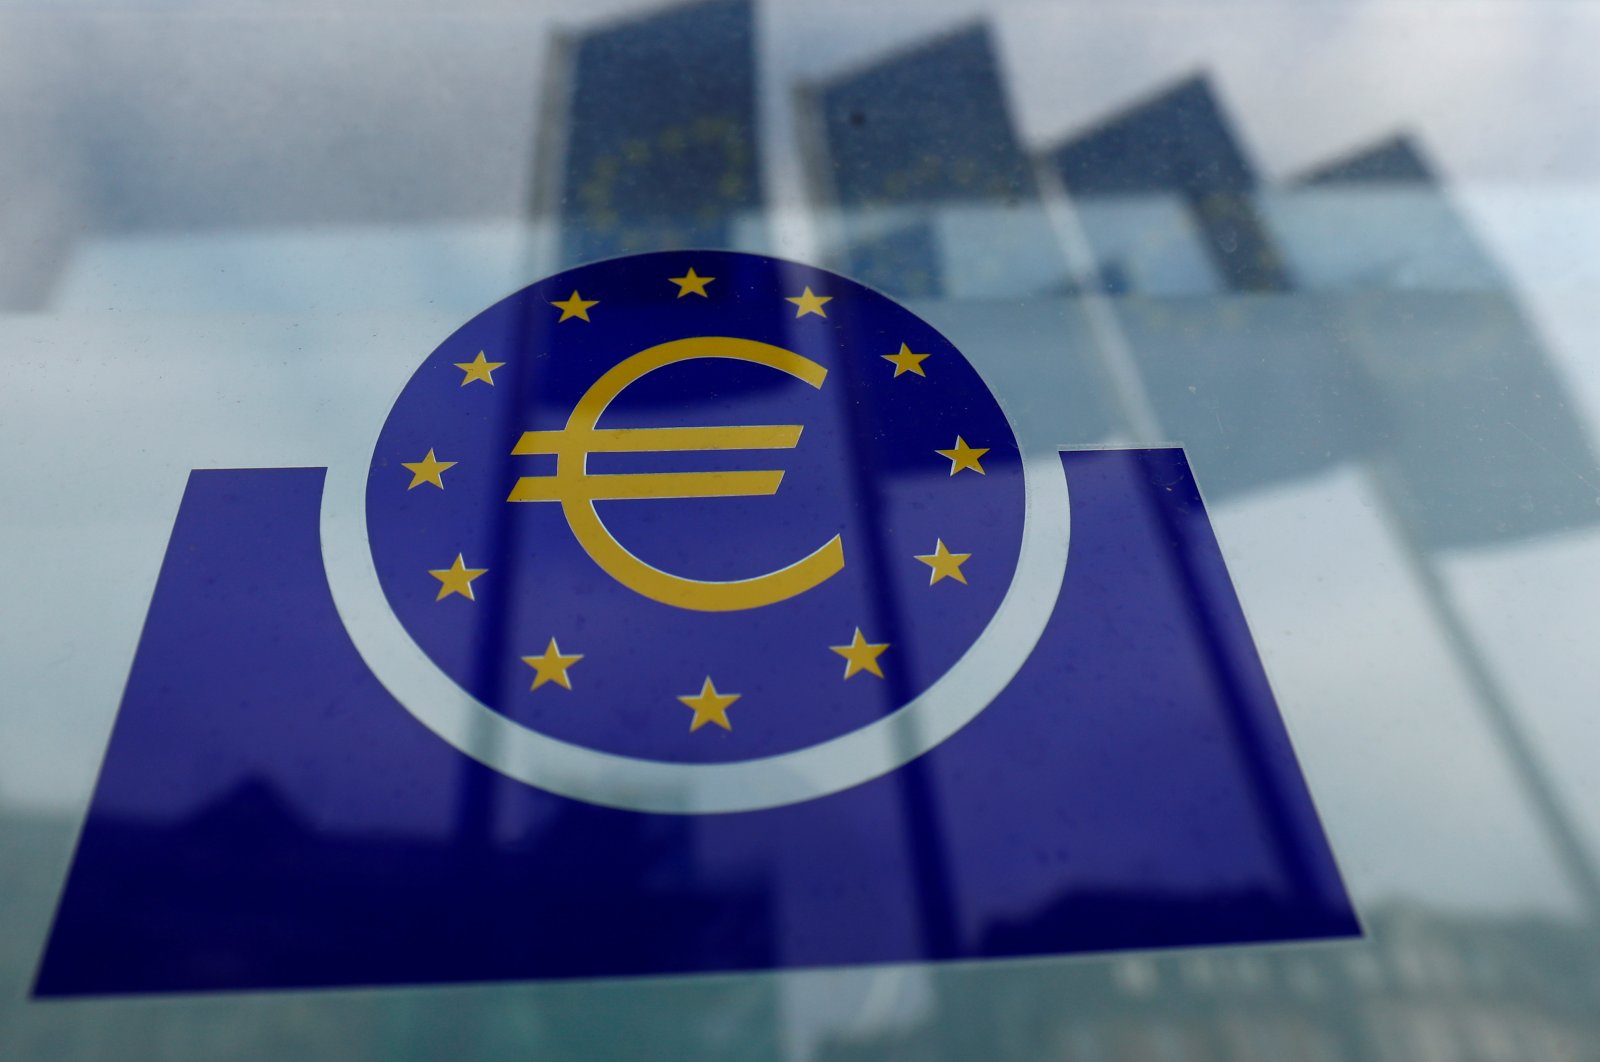 The European Central Bank logo in Frankfurt, Germany, Jan. 23, 2020. (Reuters Photo)